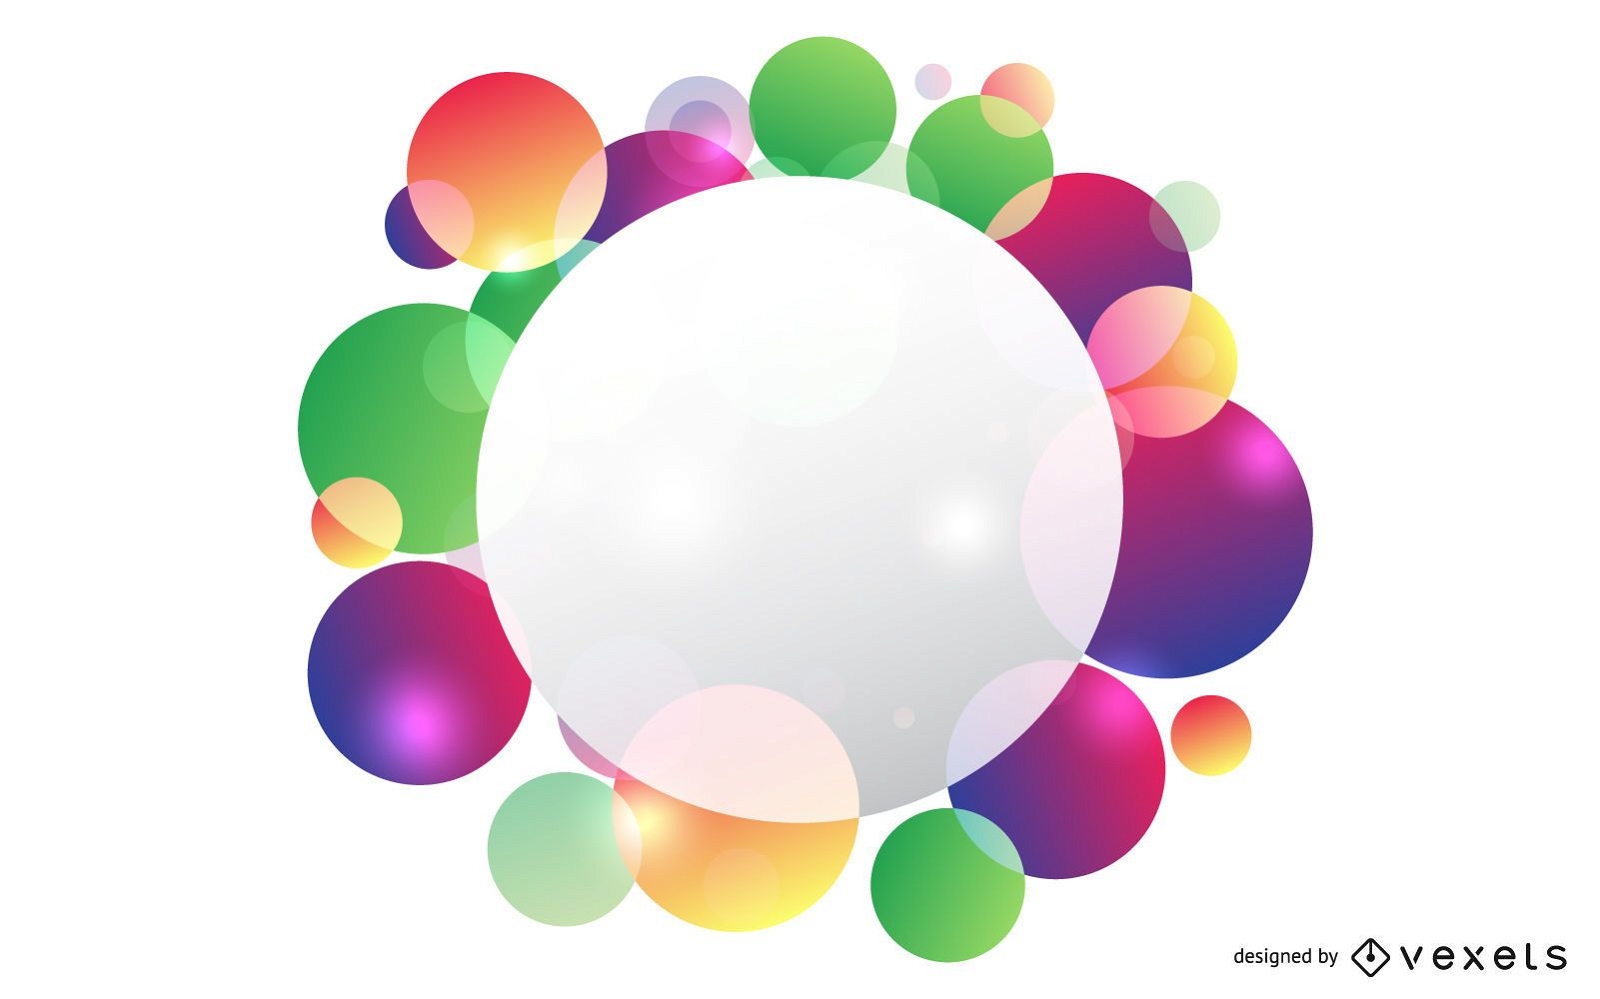 Banner de círculo de burbujas coloridas salpicadas